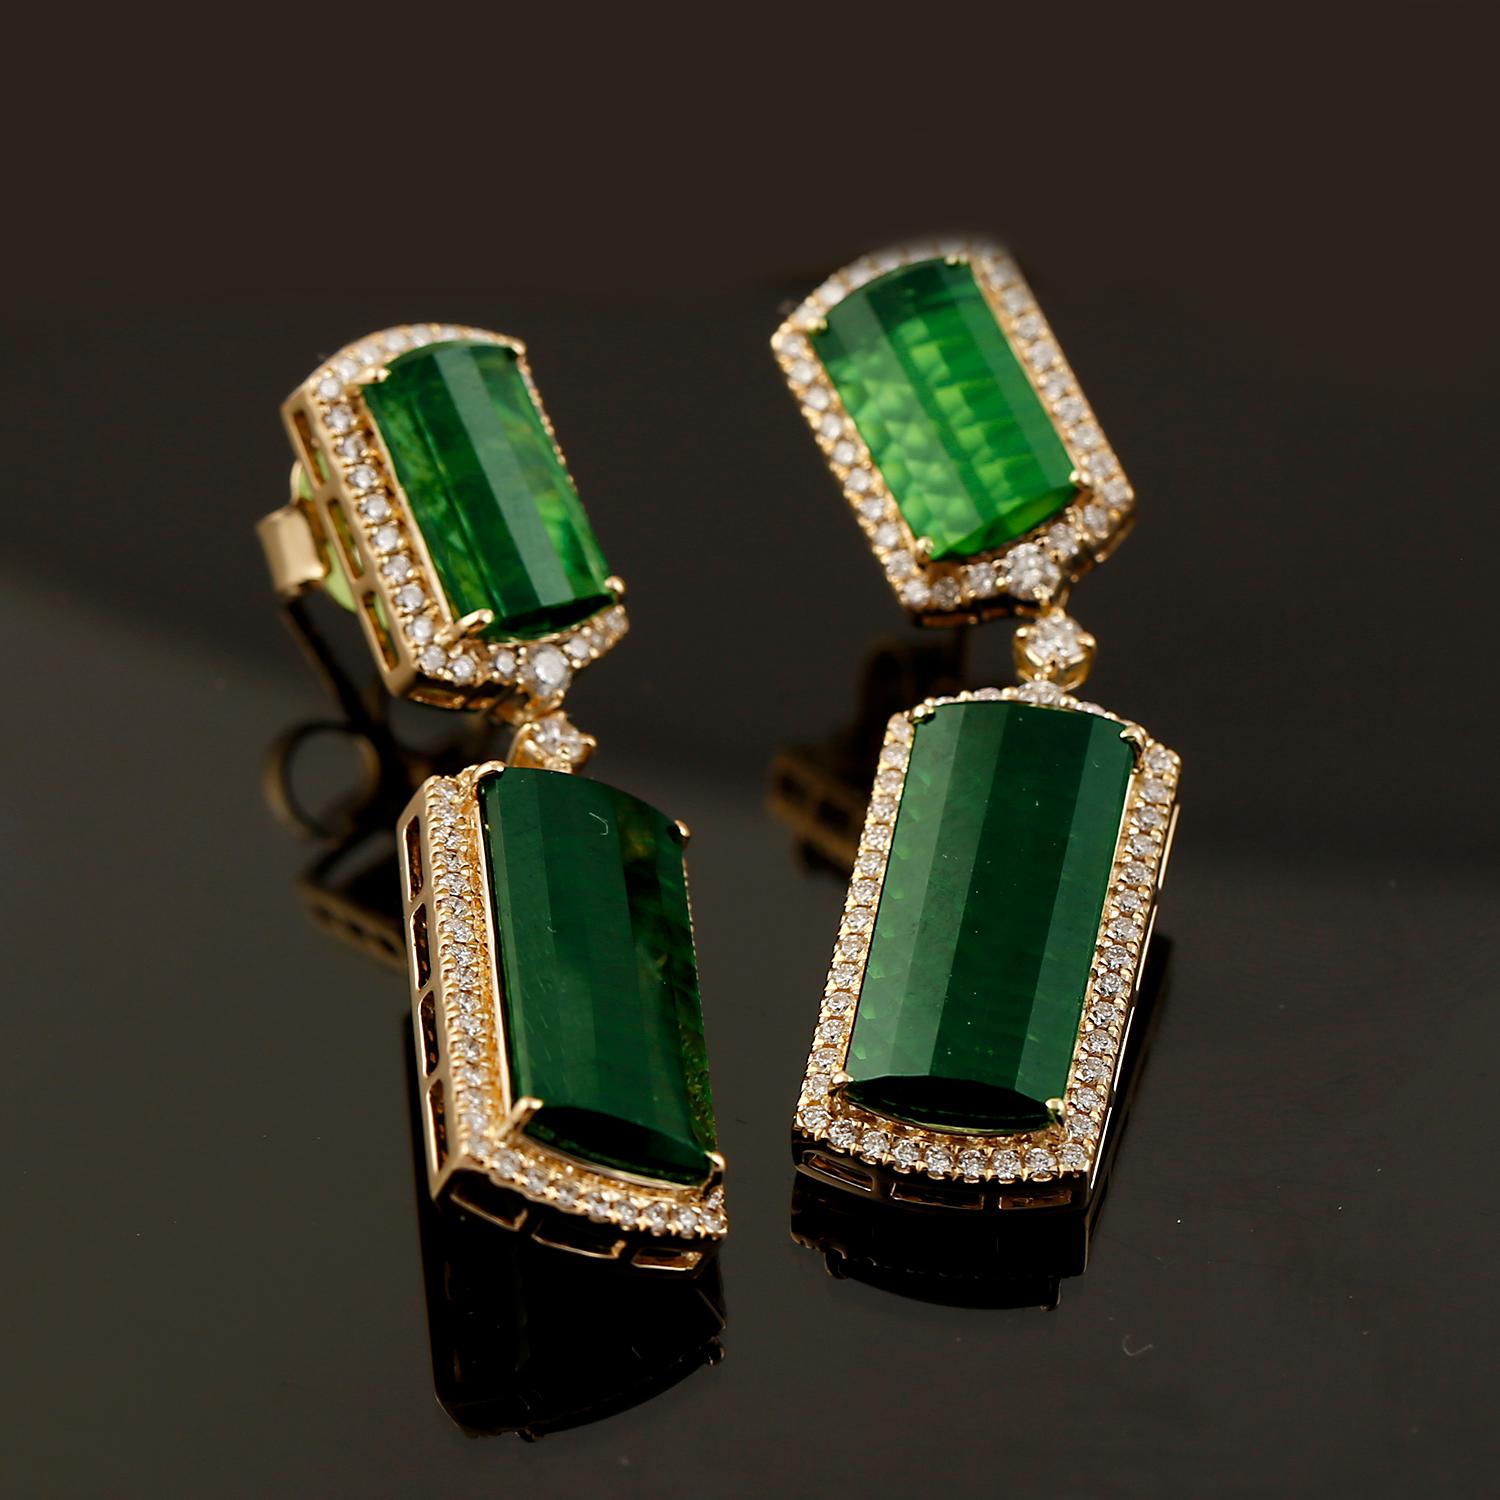 Women's Vivid Green Tourmaline Dangle Earrings With Diamonds Made In 18k Yellow Gold For Sale